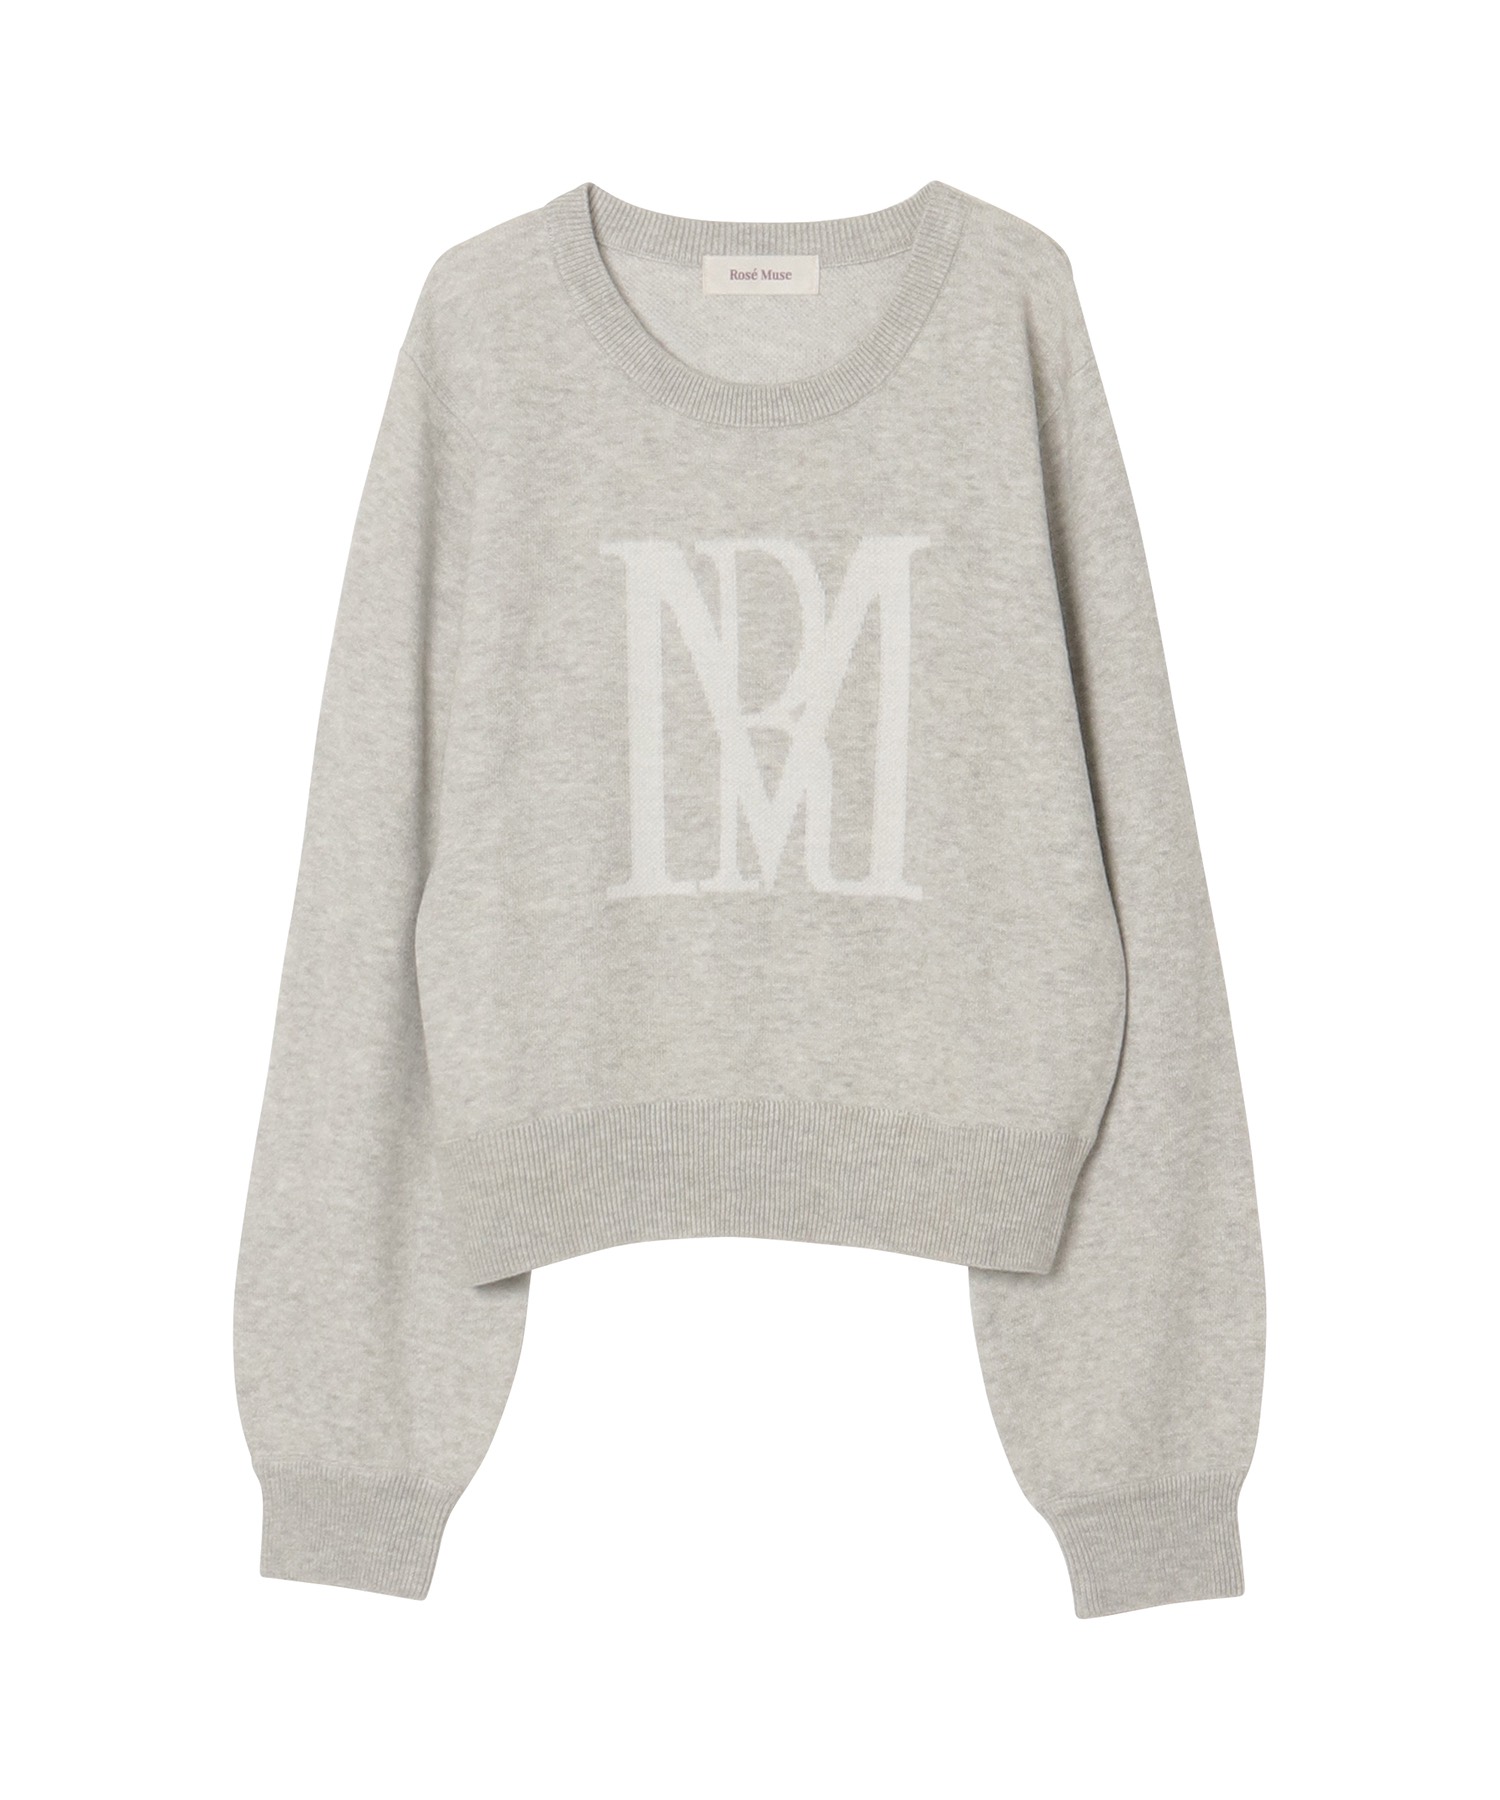 RM logo knit_M size【gray】 – BUNNY APARTMENT